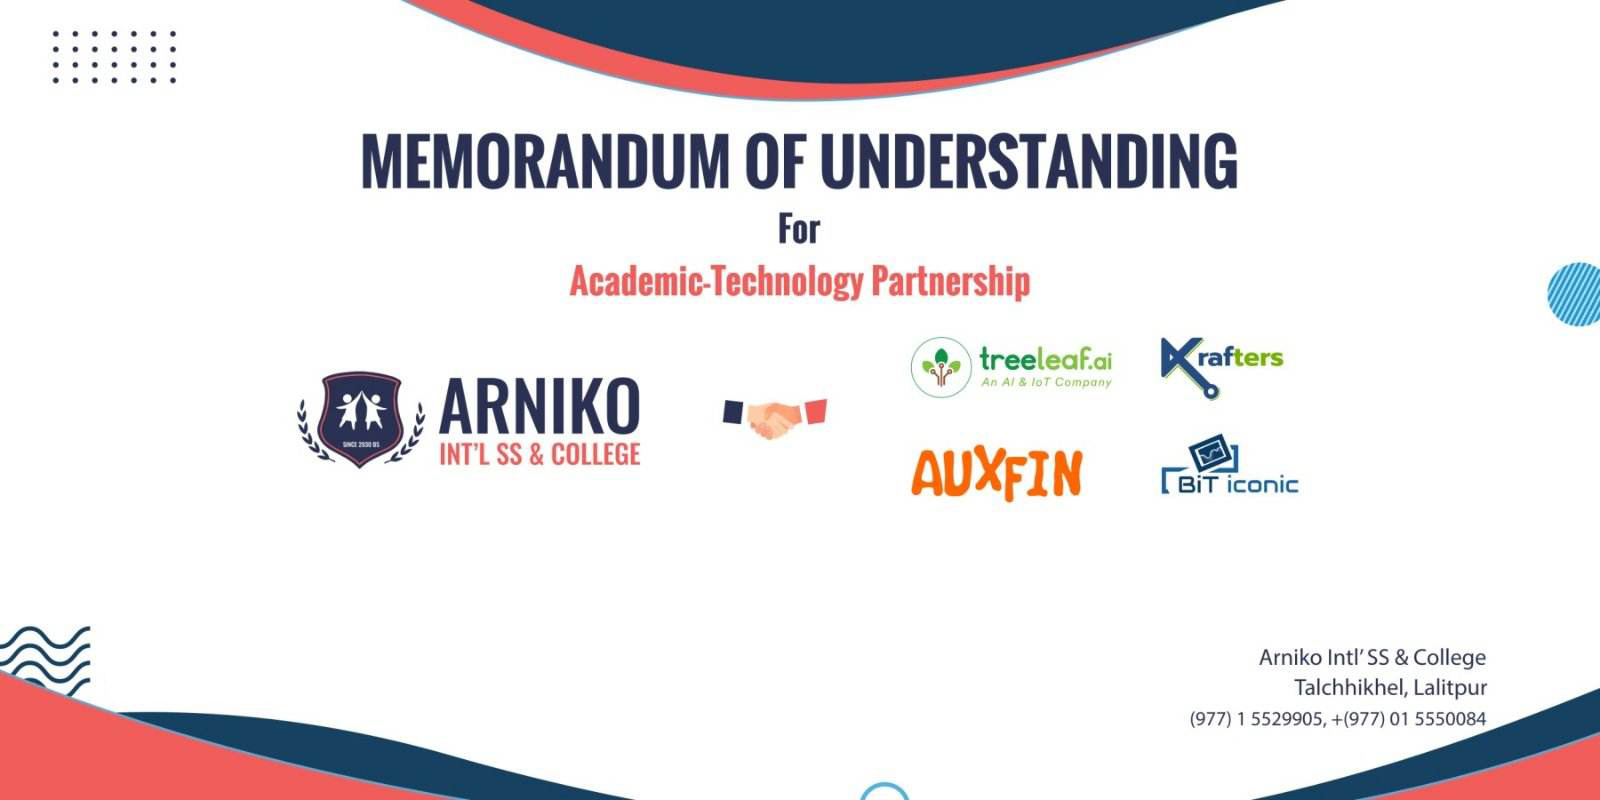 Enhancing Education through Technology – Arniko Int’l SS & College